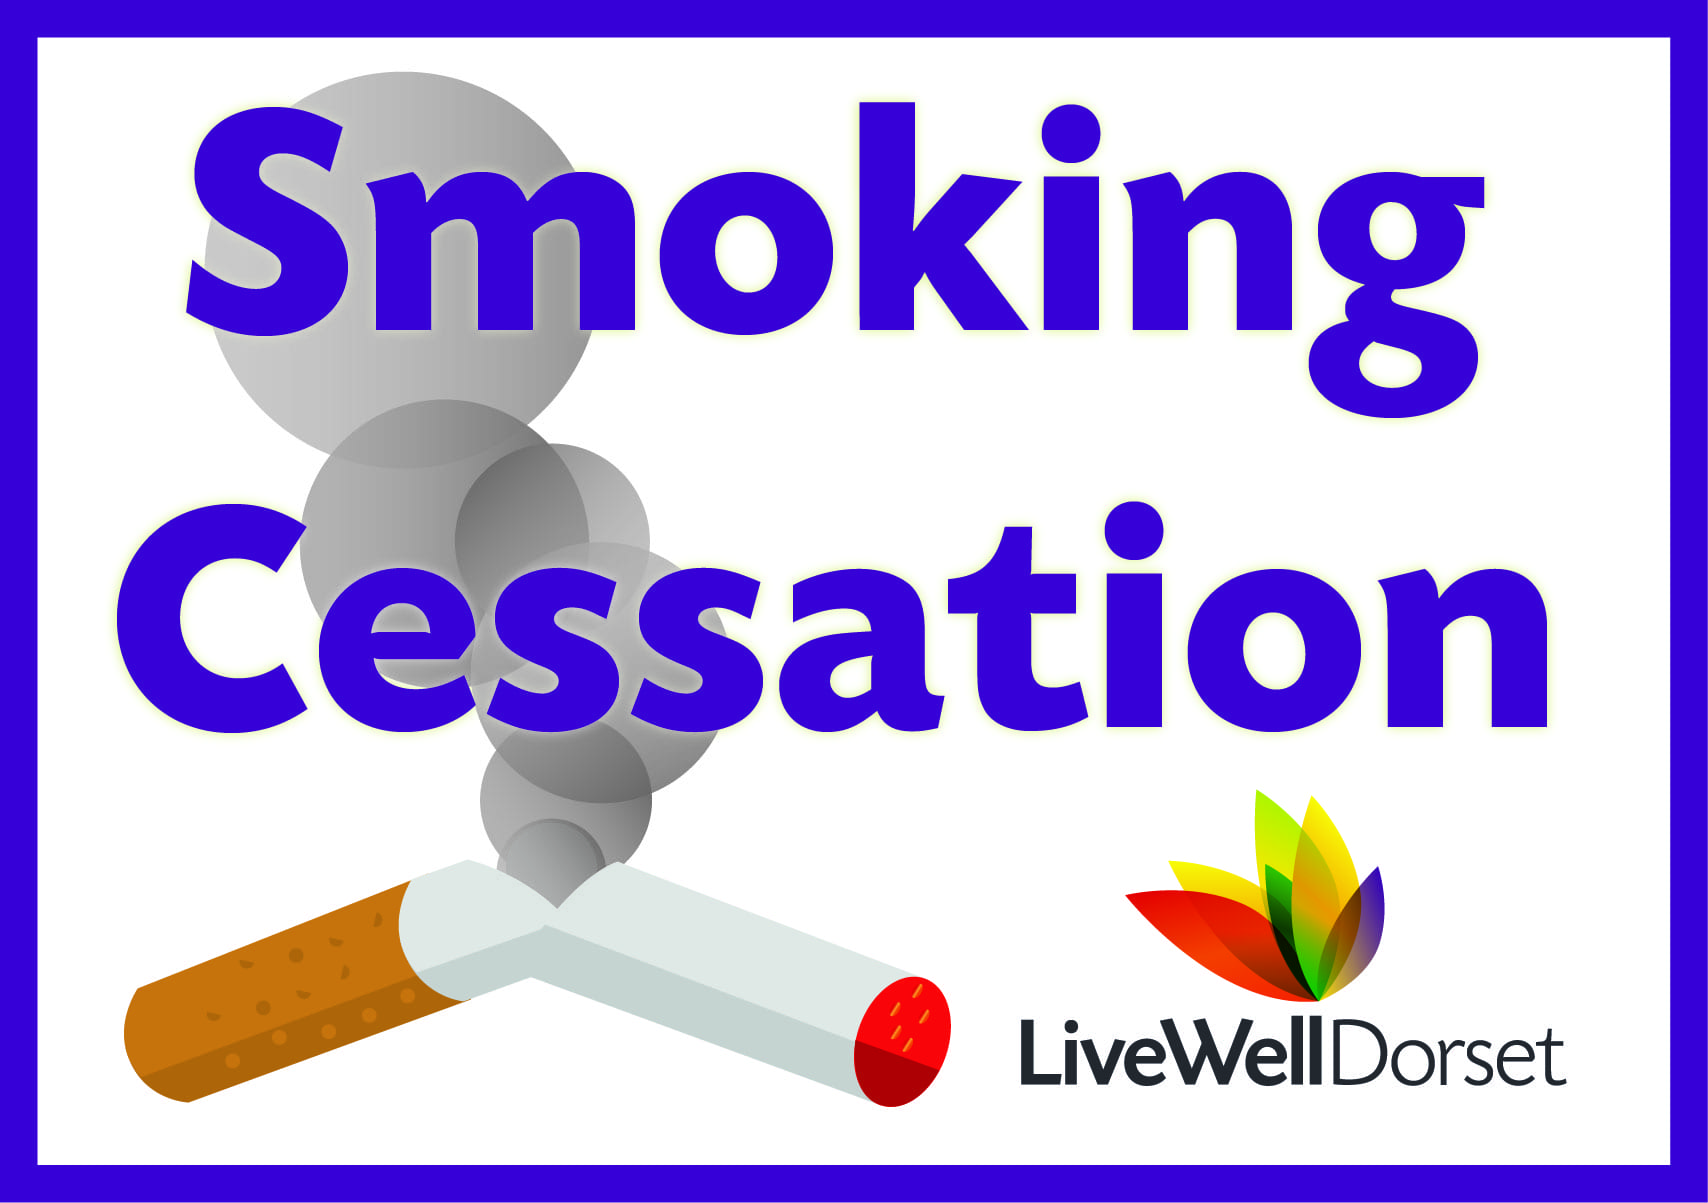 LiveWell Dorset – Smoking Cessation